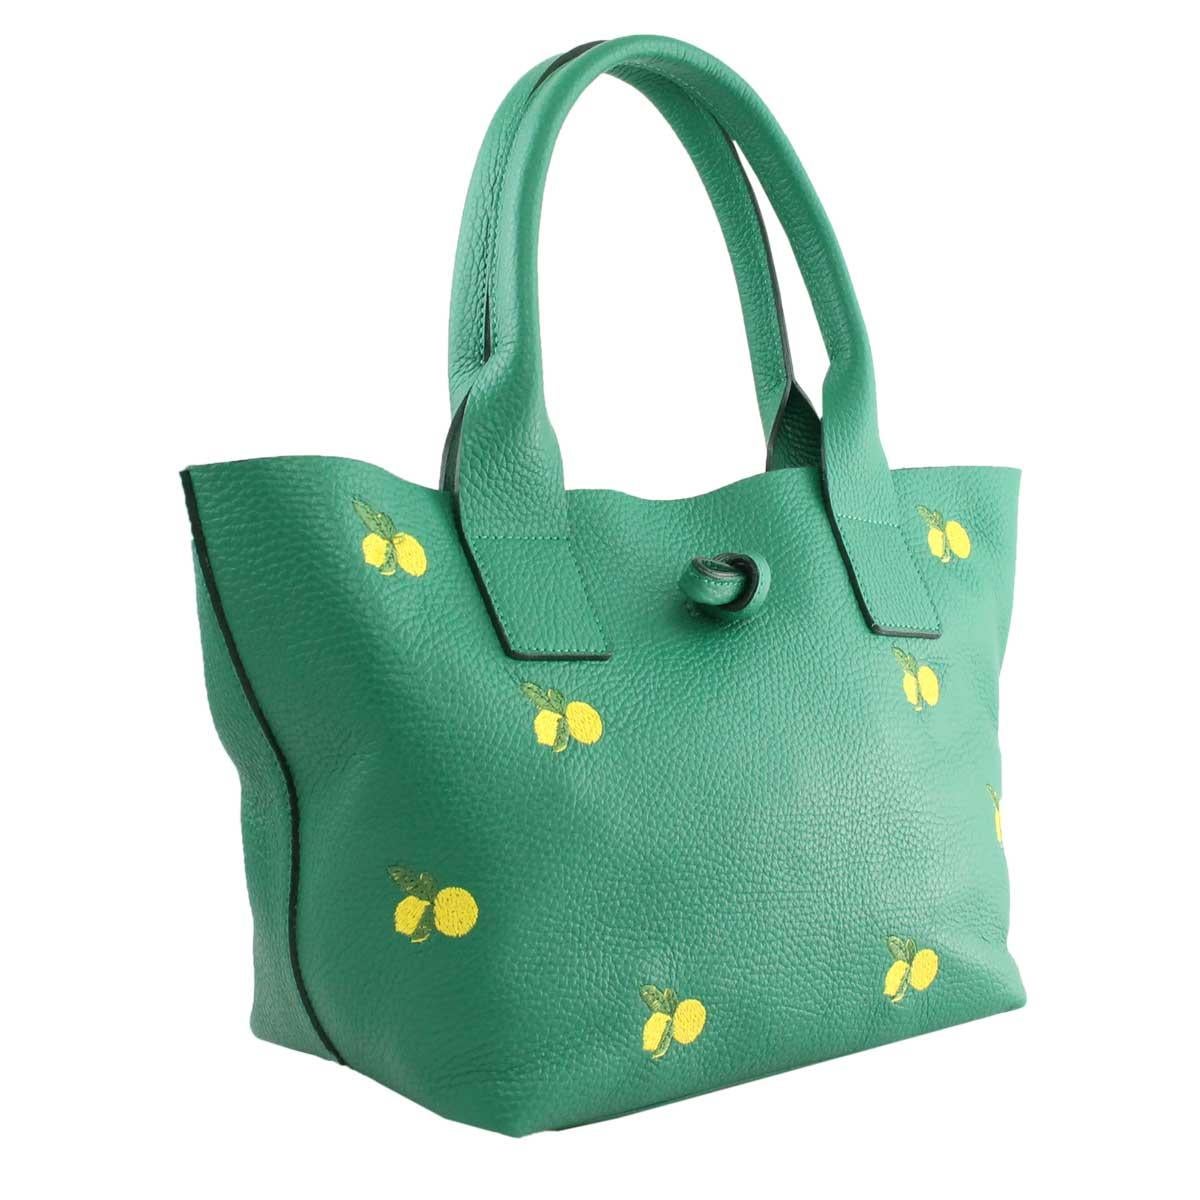 Women's or Men's Le Moki Green Leather Handle Shoulder Bag